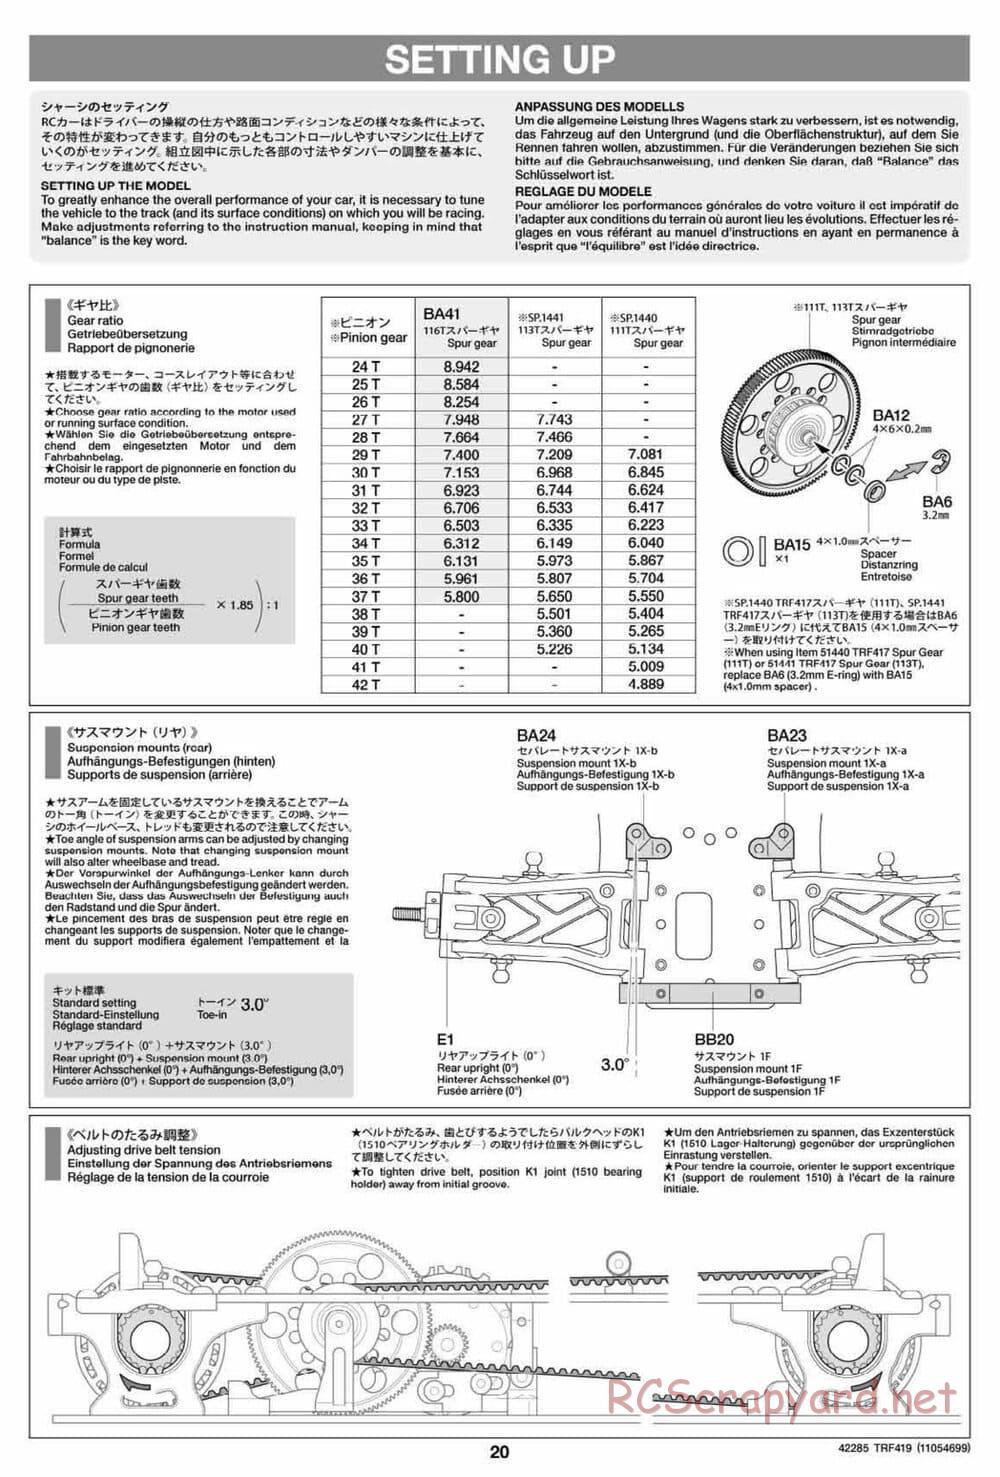 Tamiya - TRF419 Chassis - Manual - Page 20